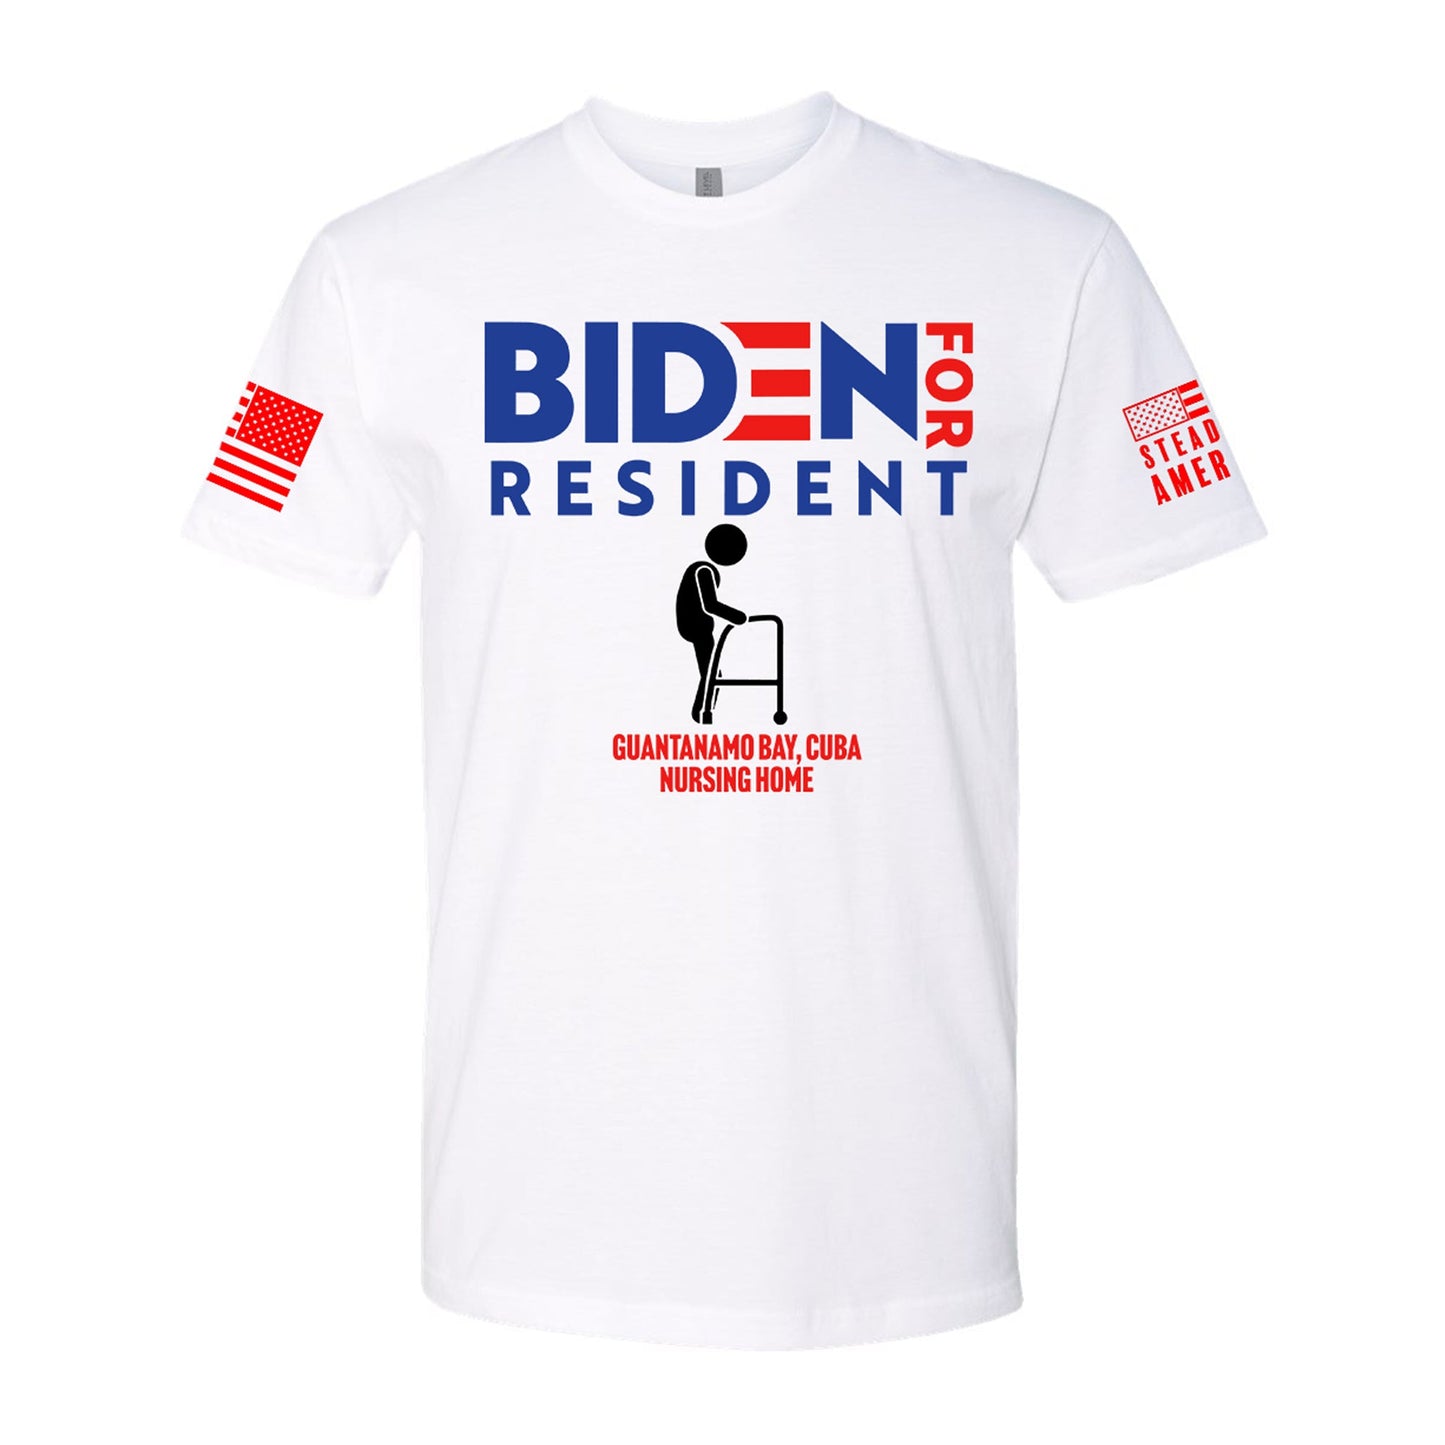 Biden for Resident at Guantanamo Bay Nursing Home, Short Sleeve, Heather Gray / O.D. Green / White